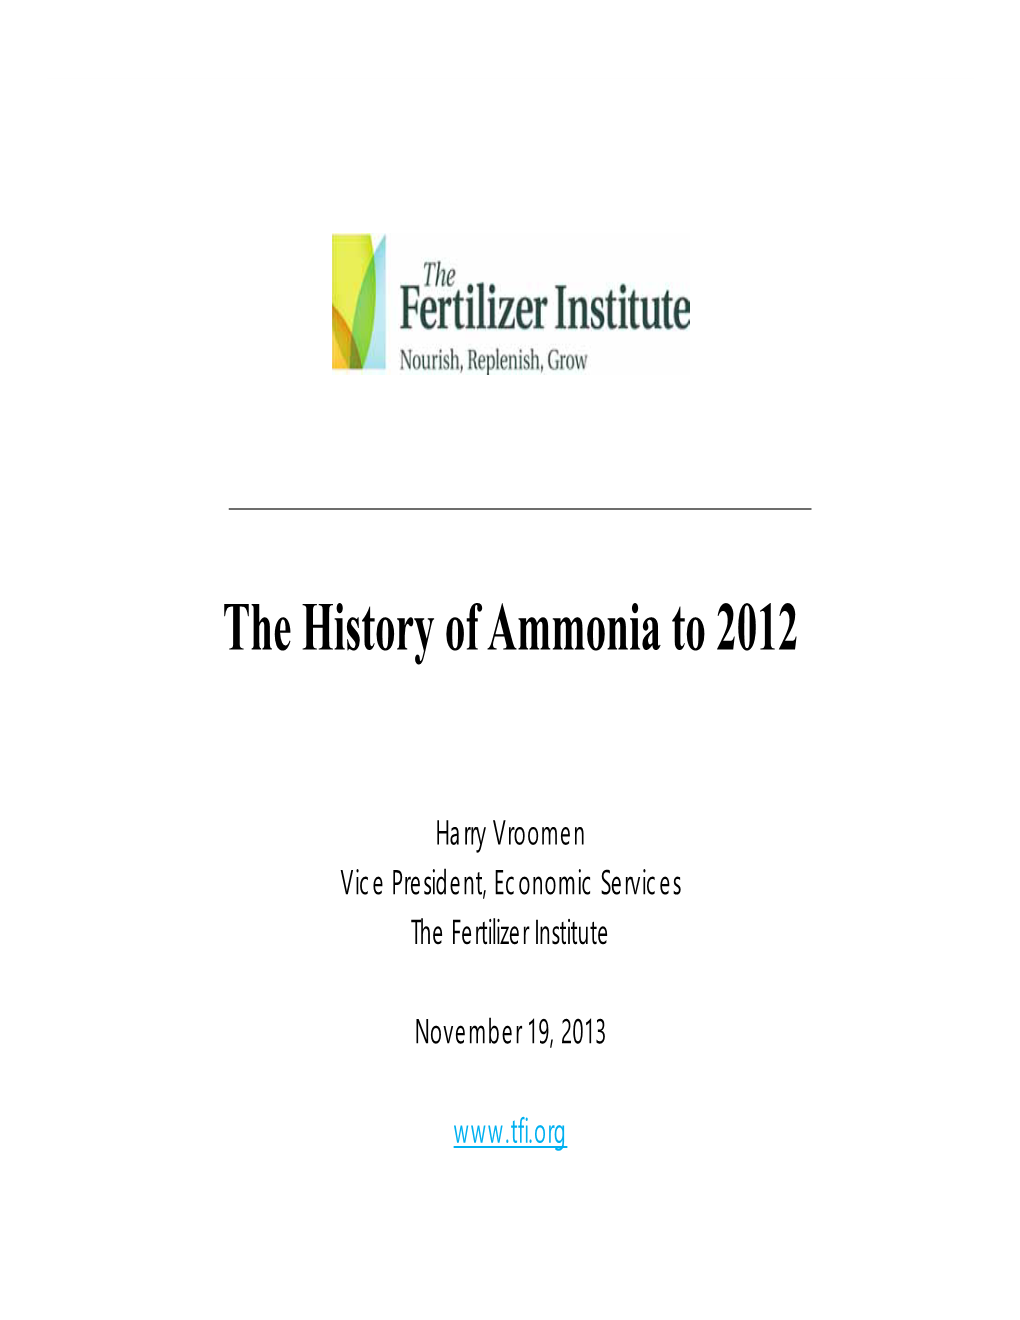 The History of Ammonia to 2012